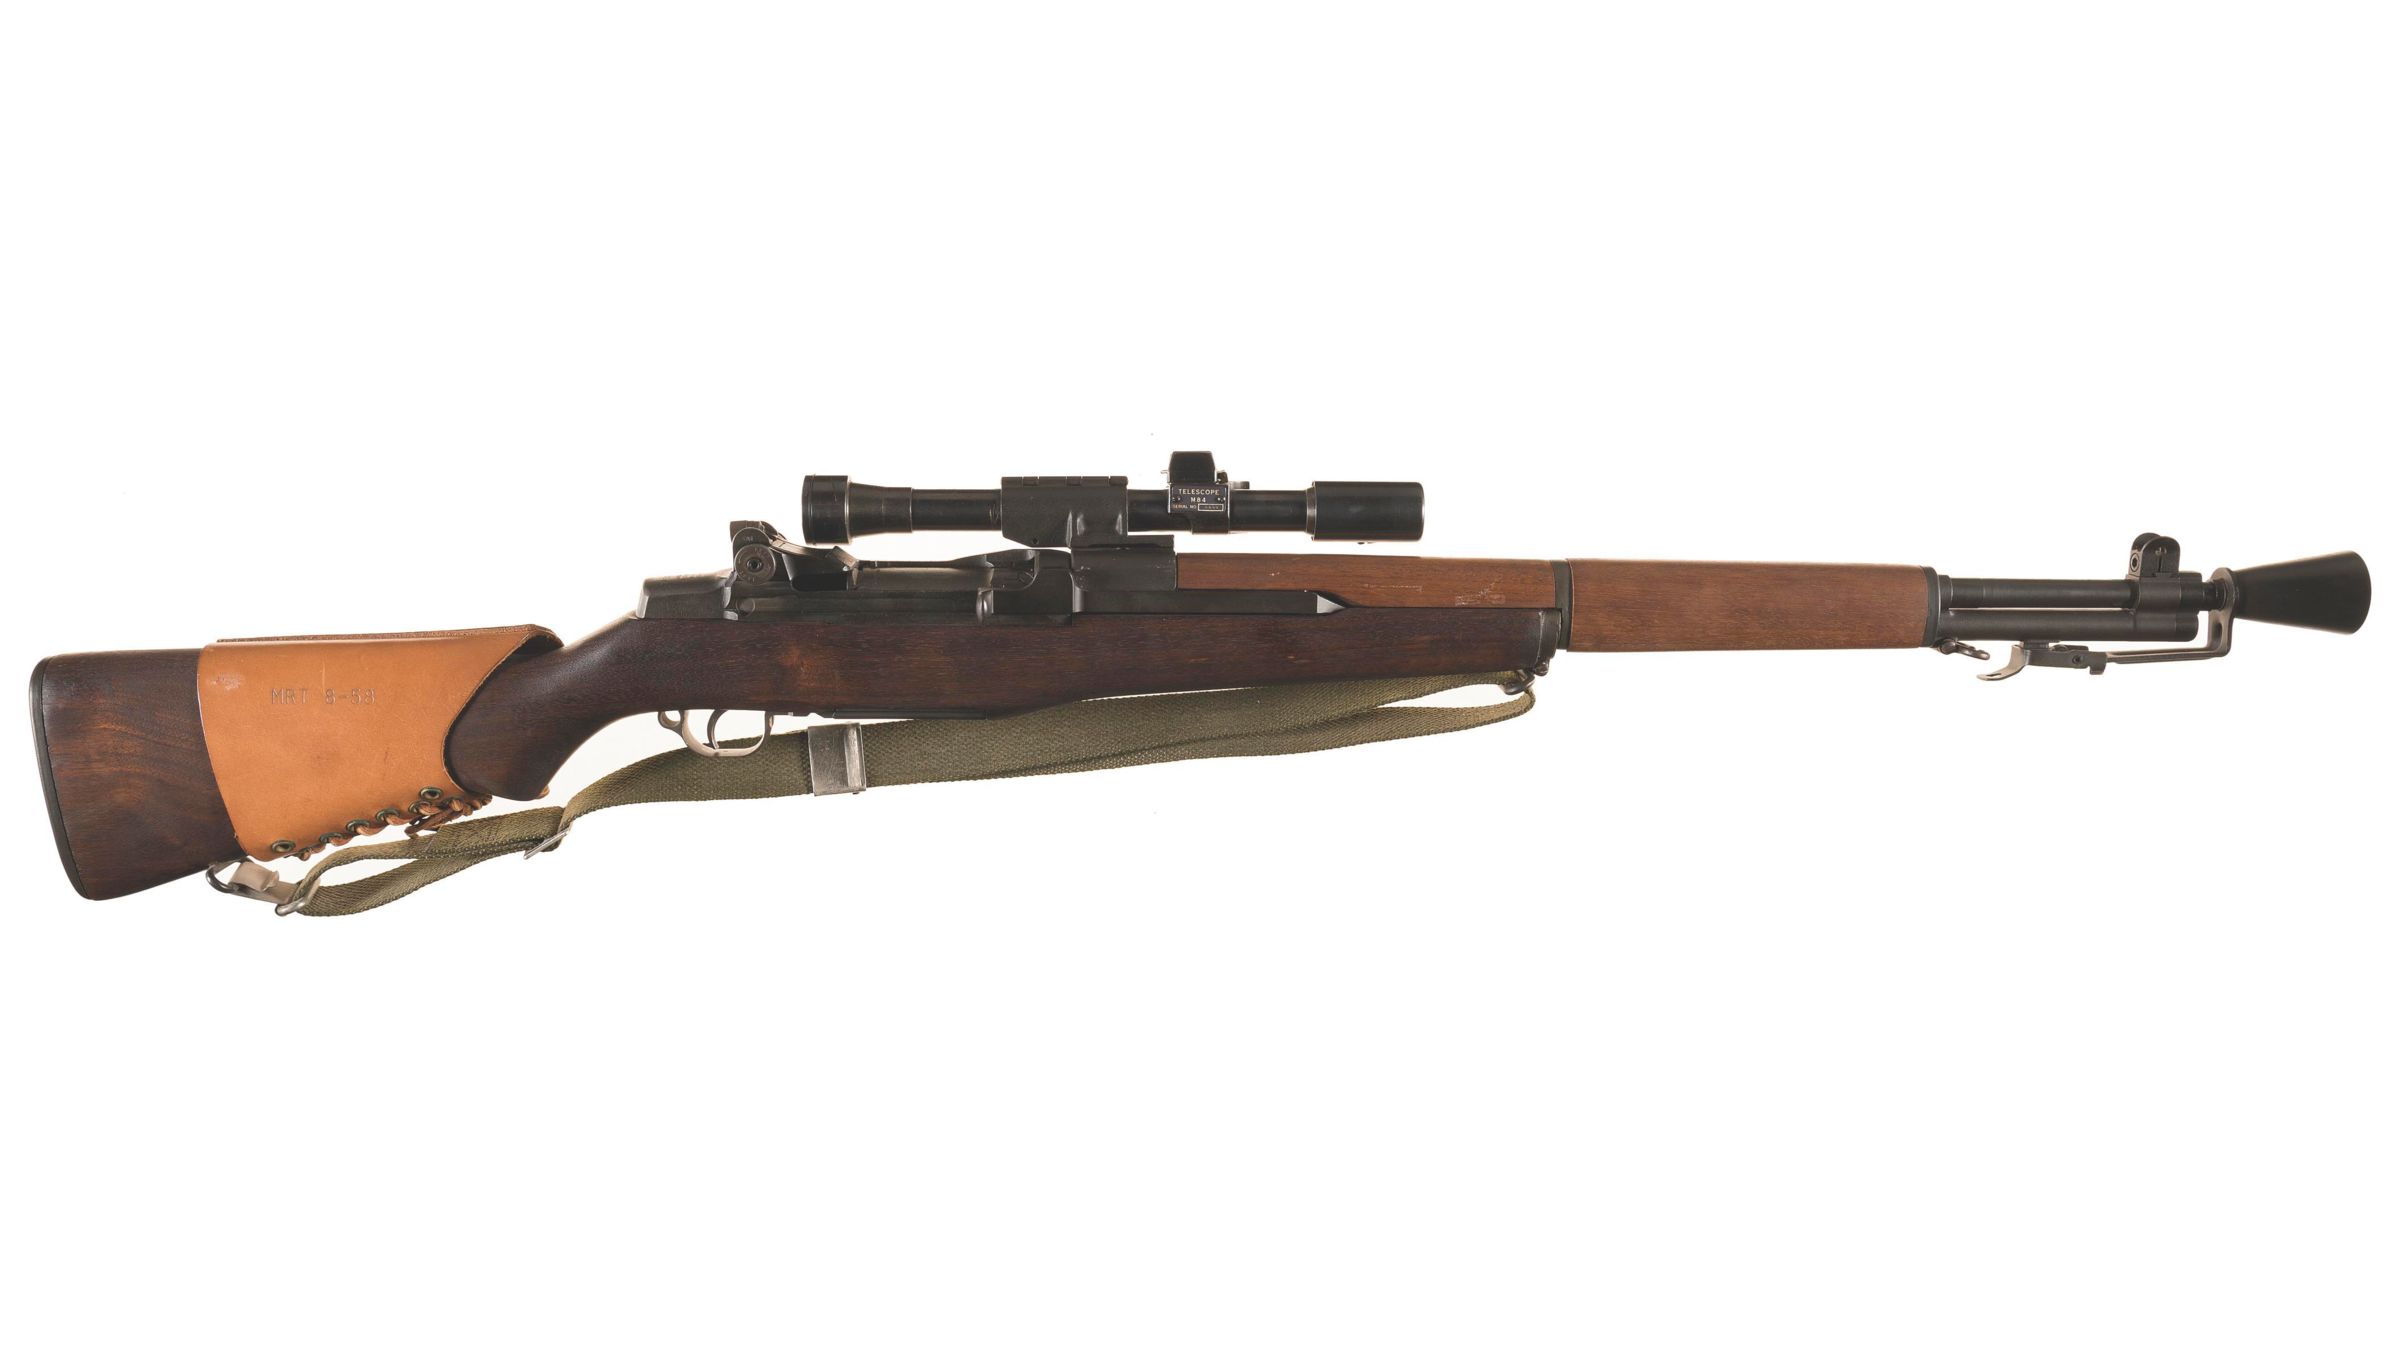 U.S. Springfield M1D Semi-Automatic Sniper Rifle with M84 